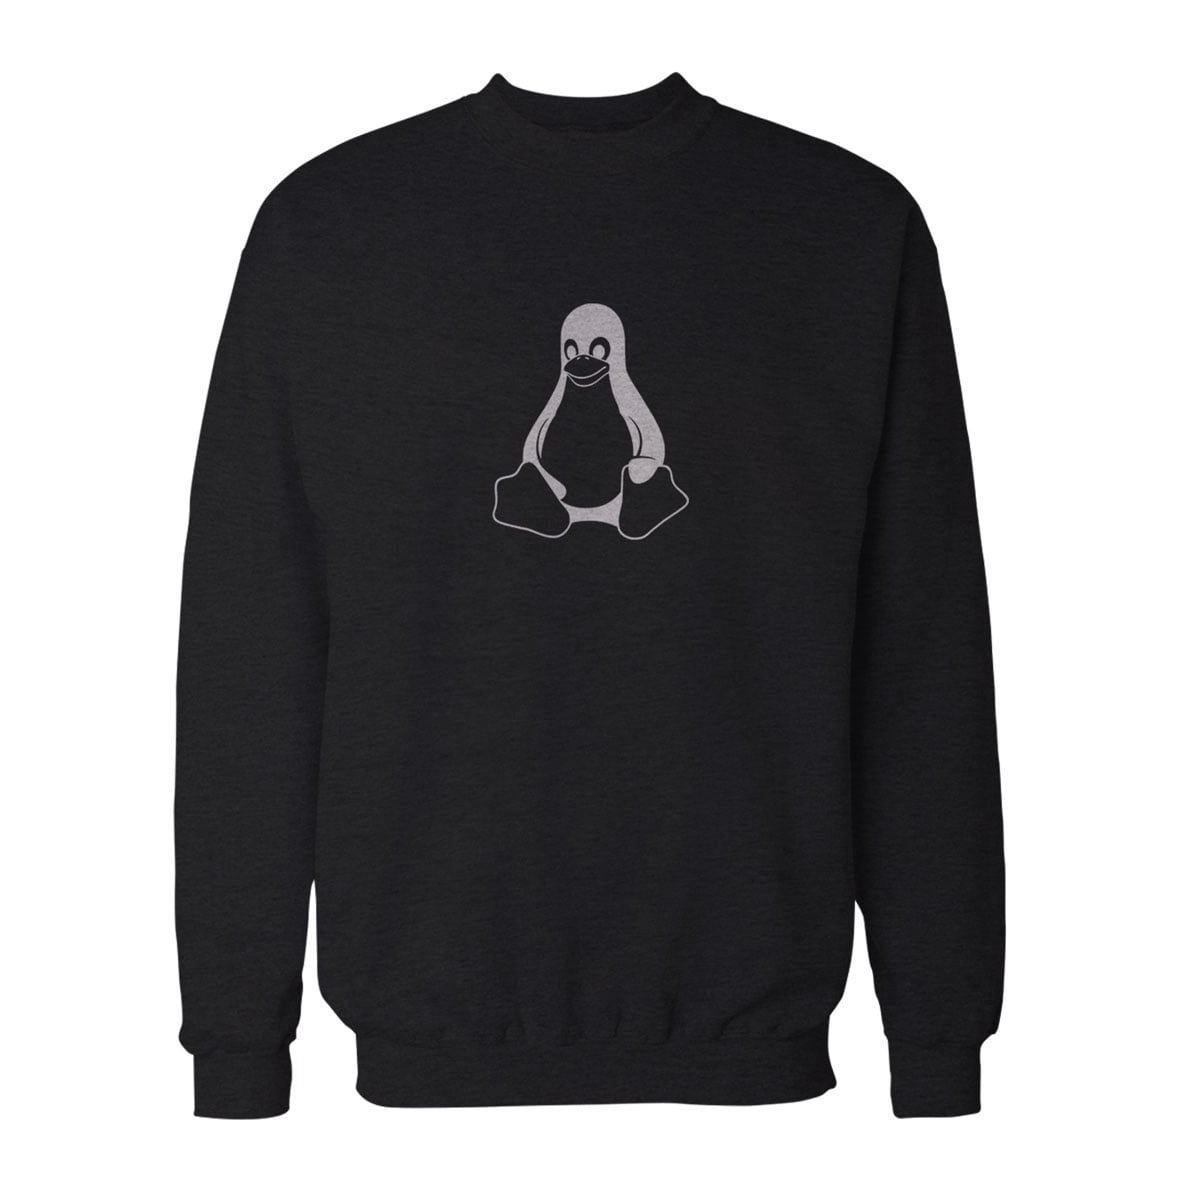 Bilisim Linux Sweatshirt S 2